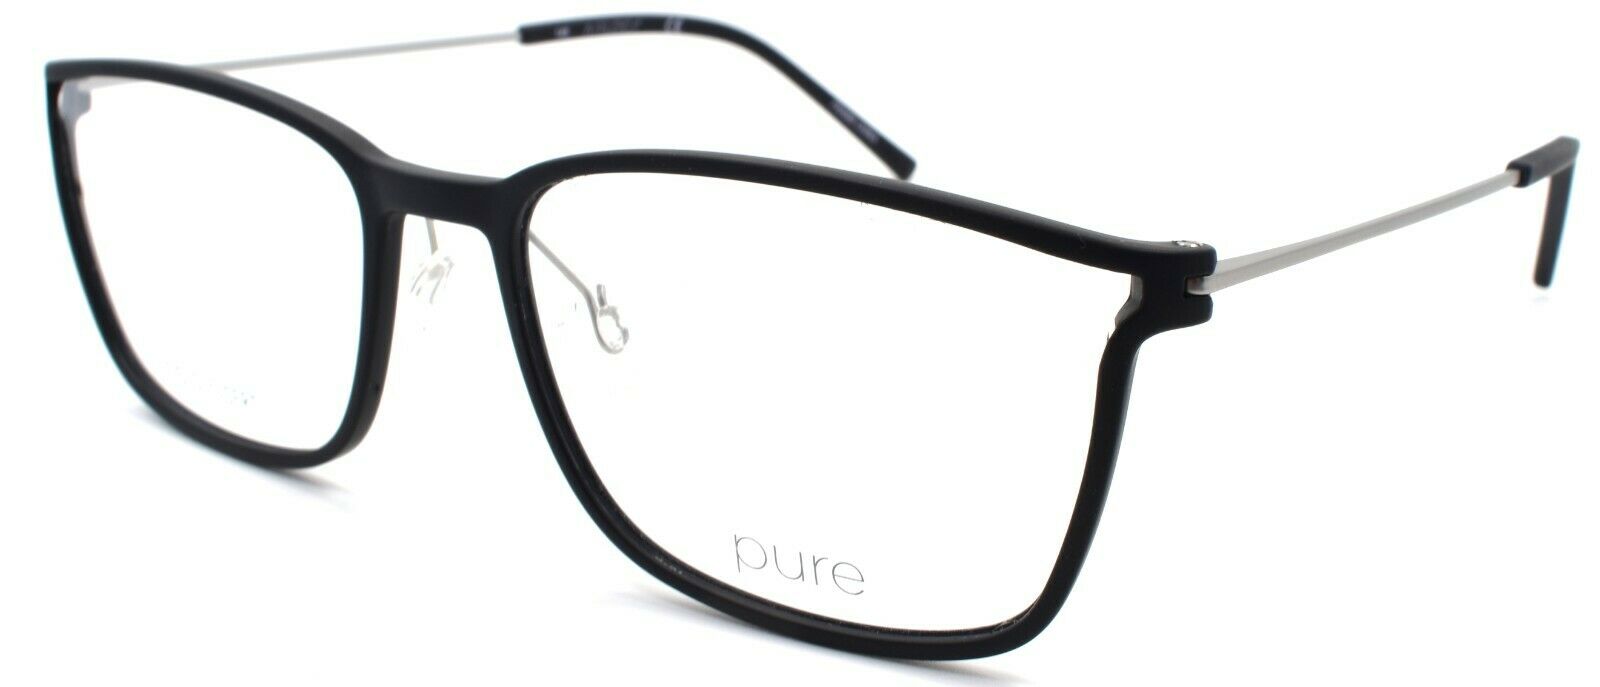 1-Marchon Airlock 2001 002 Men's Eyeglasses Frames 54-17-145 Matte Black-886895394123-IKSpecs